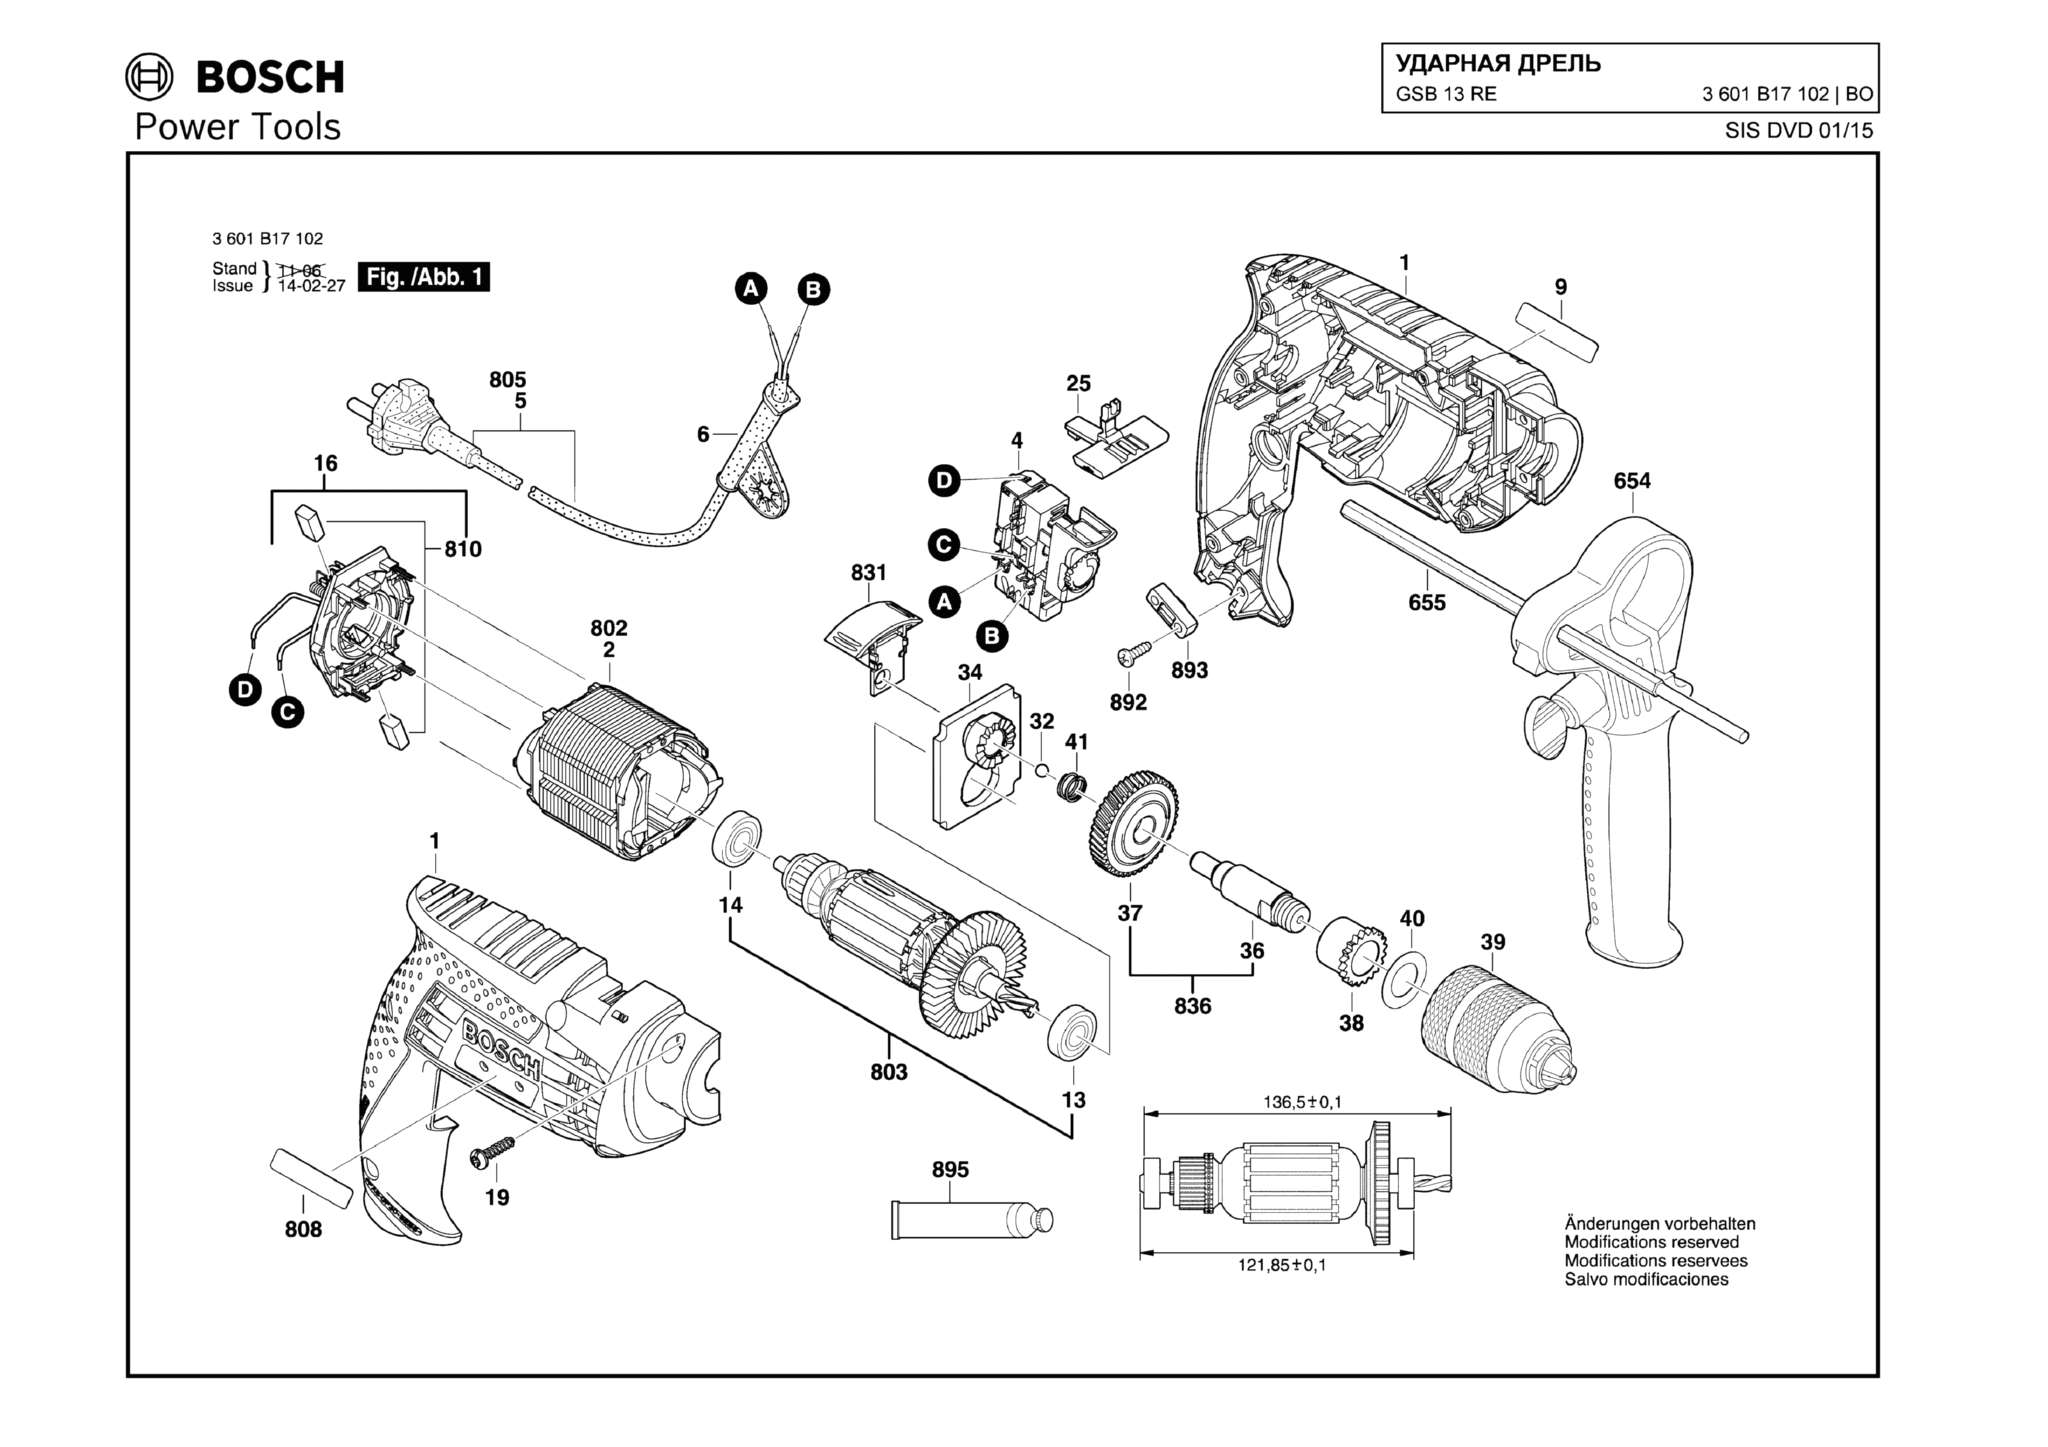 Запчасти, схема и деталировка Bosch GSB 13 RE (ТИП 3601B17102)